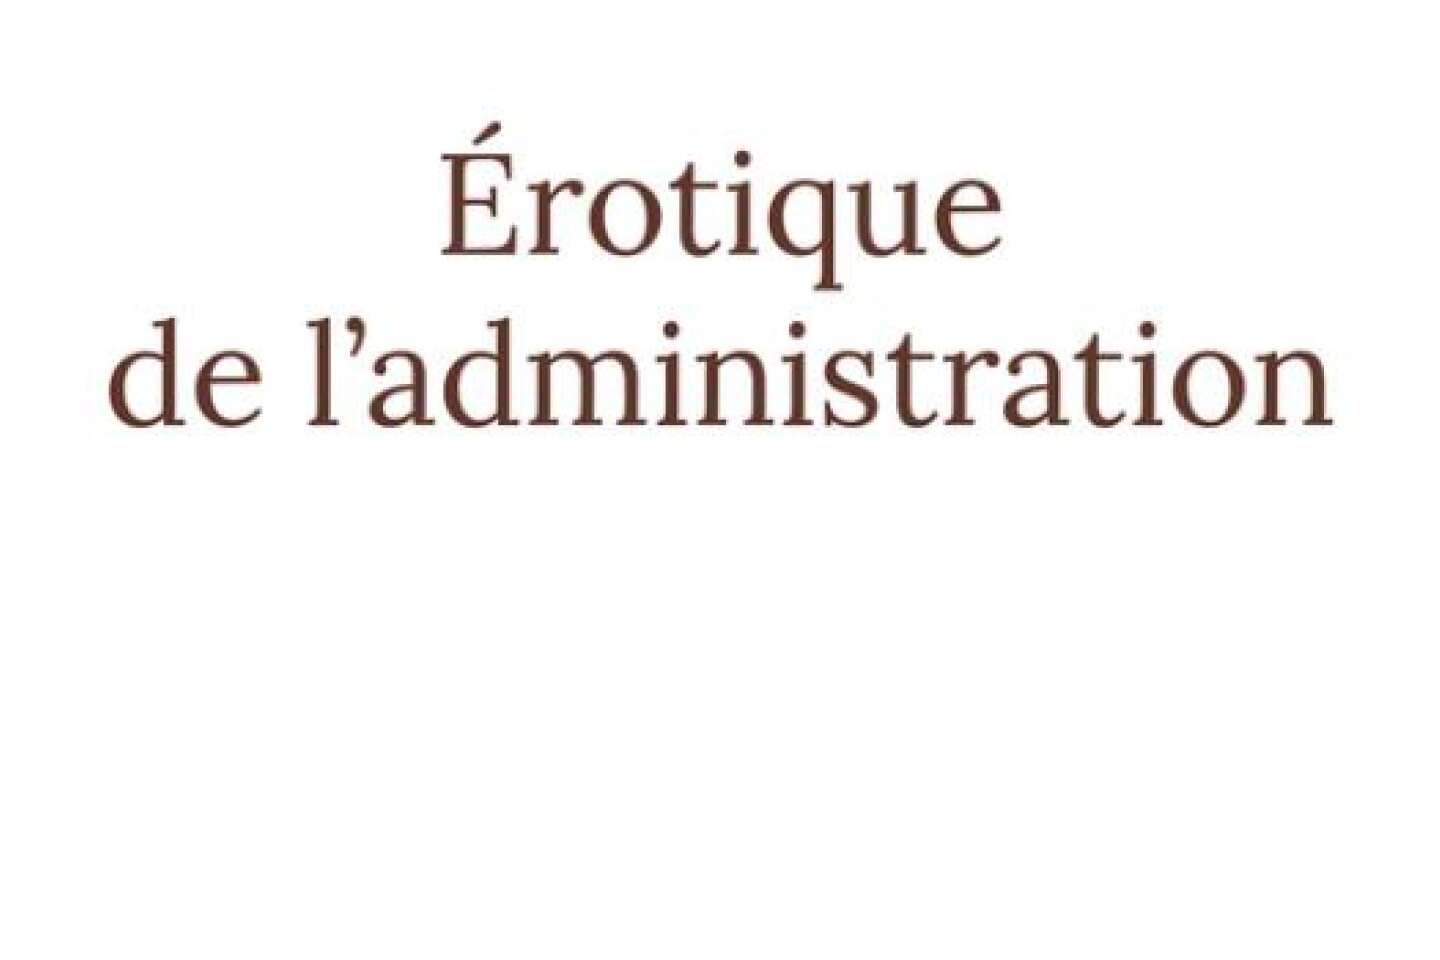 “Erotique de l’administration”, a book to explore the purposes of management